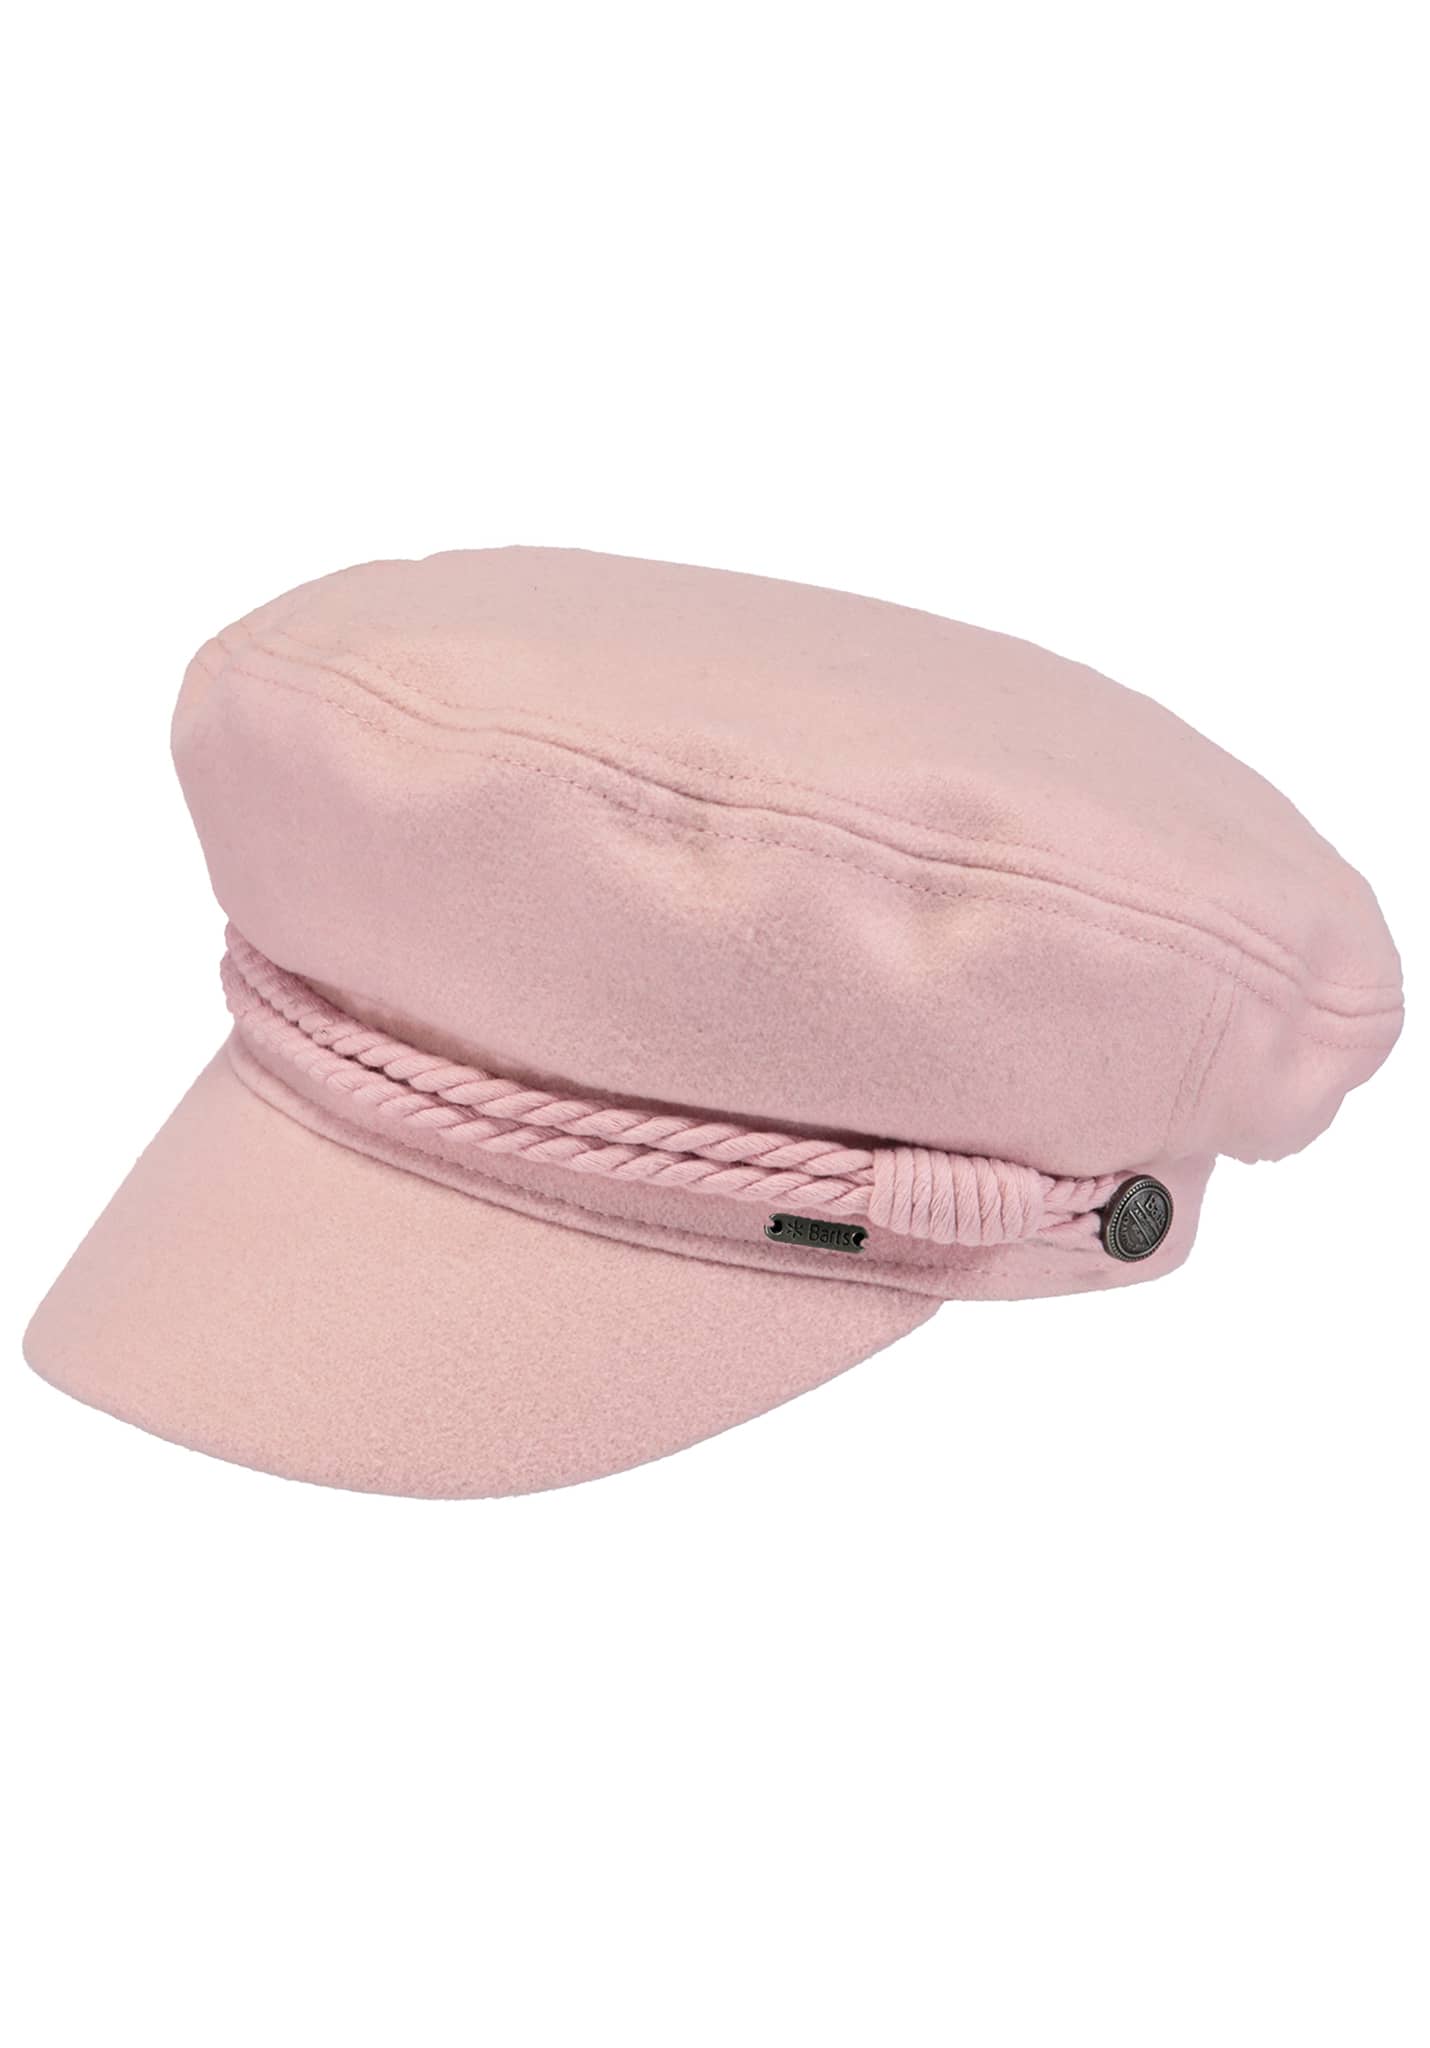 Barts Skipper Headwear pink One Size